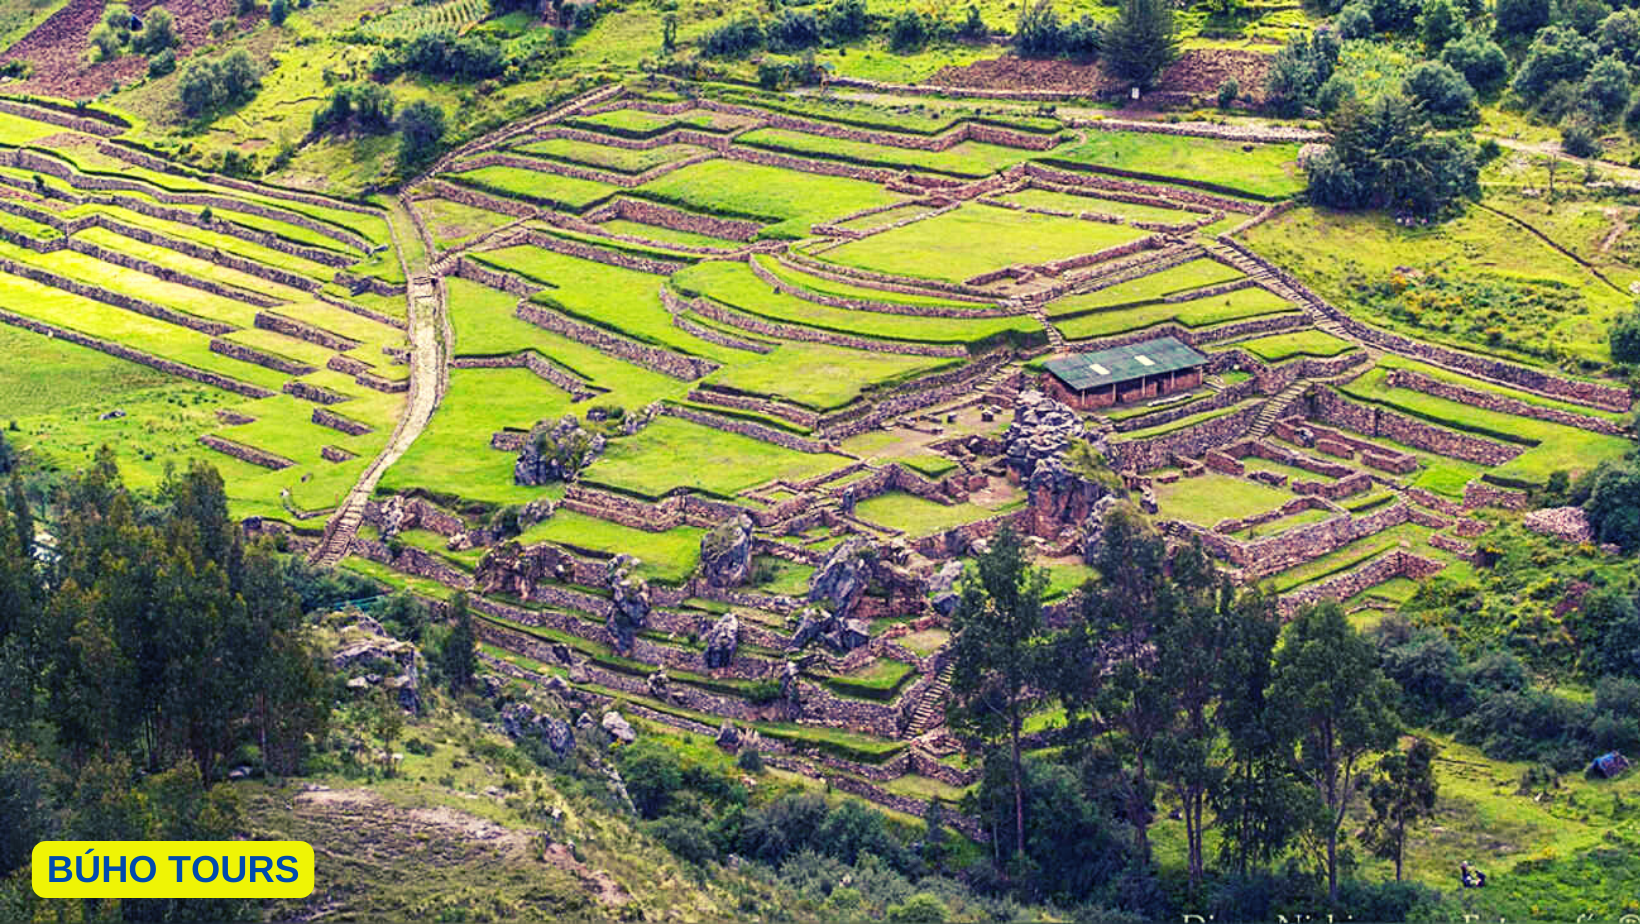 Sitio Arqueológico de Inkilltambo Cusco